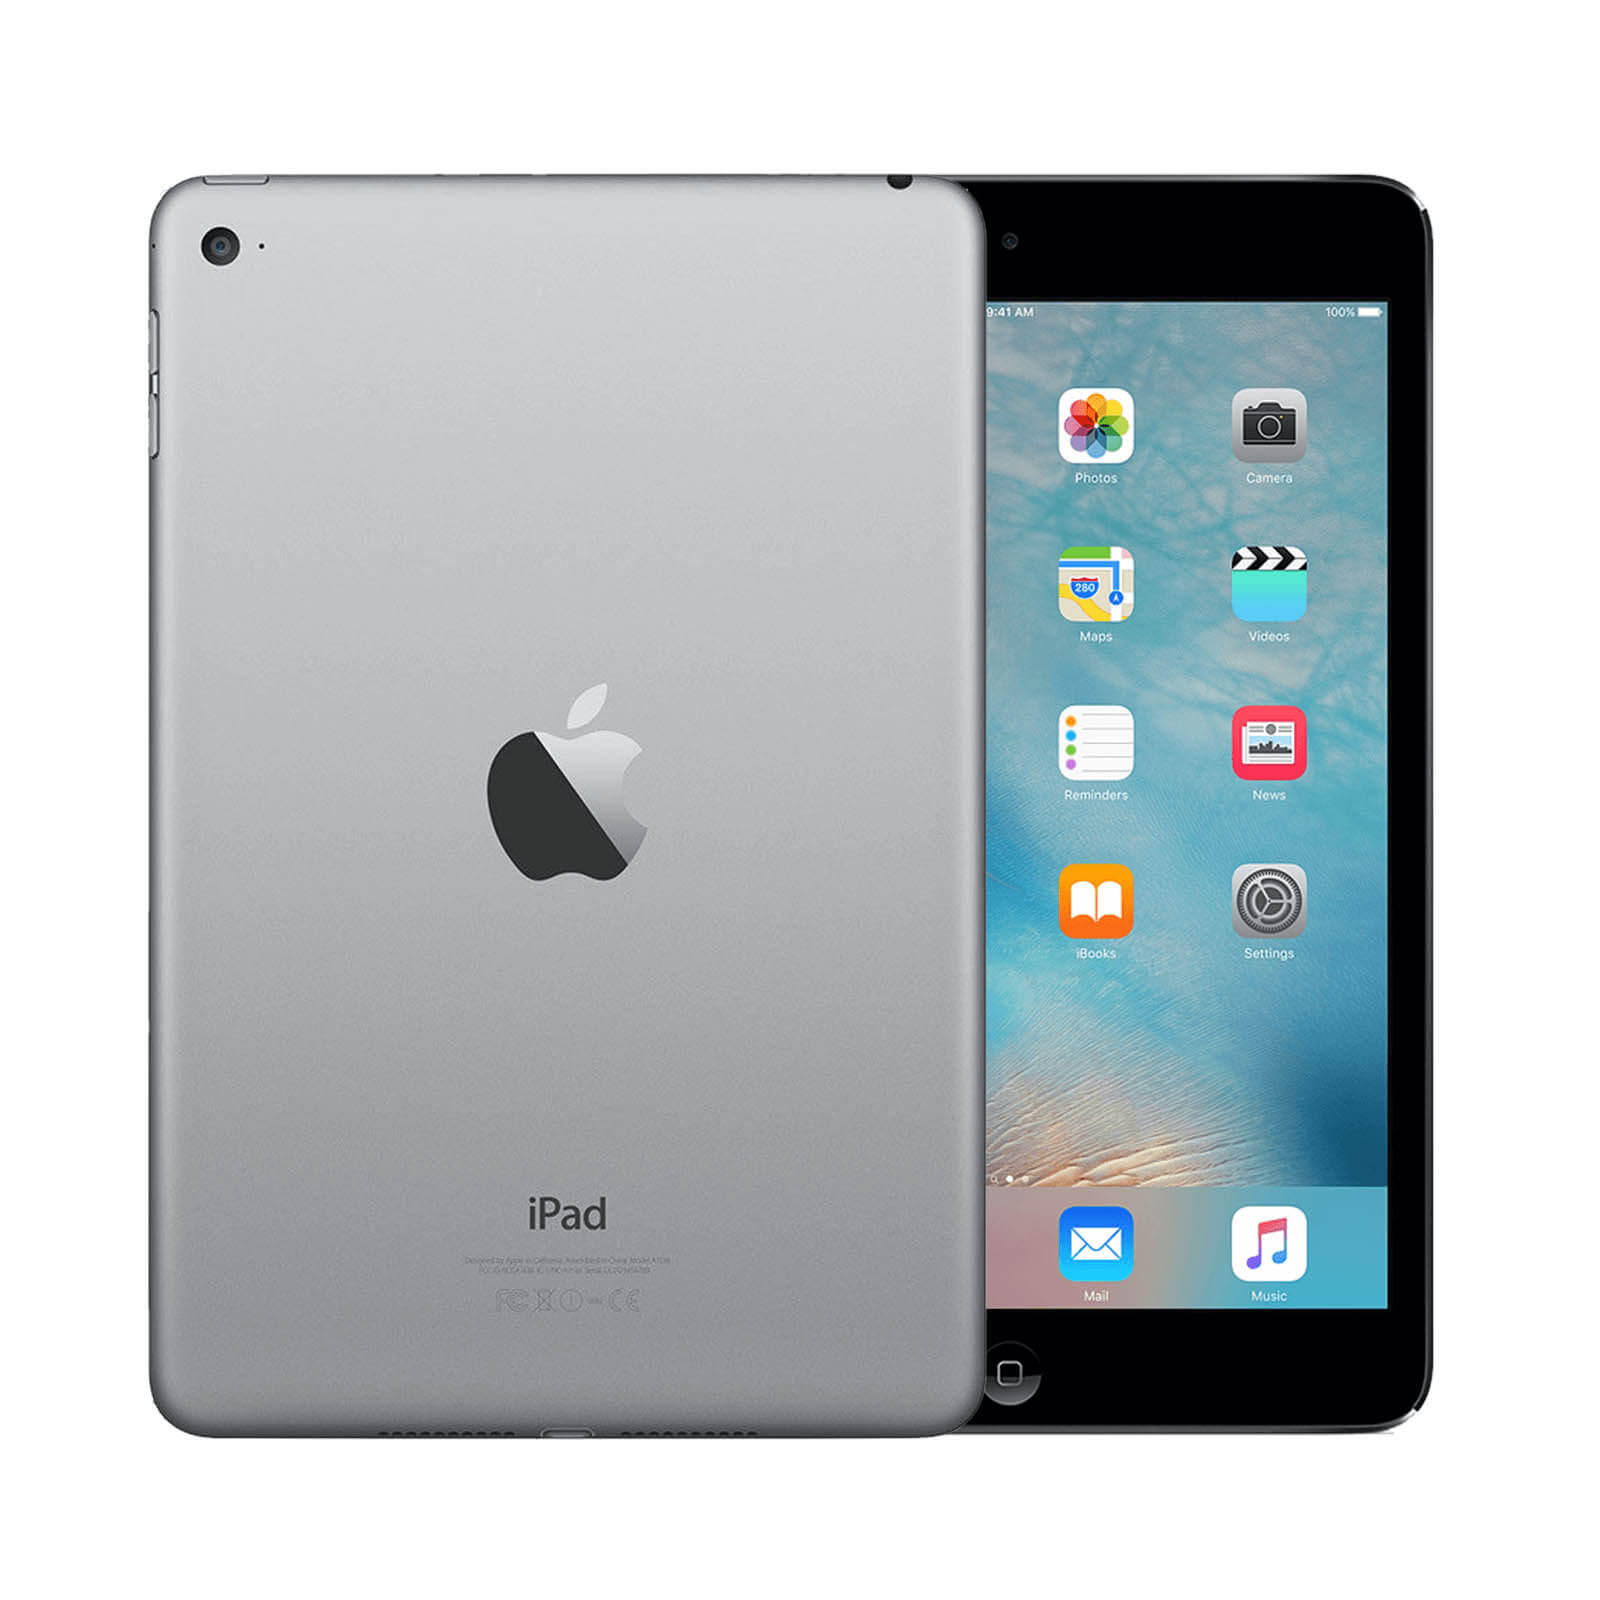 Apple iPad Mini 4 16GB Space Grau WiFi - Fair